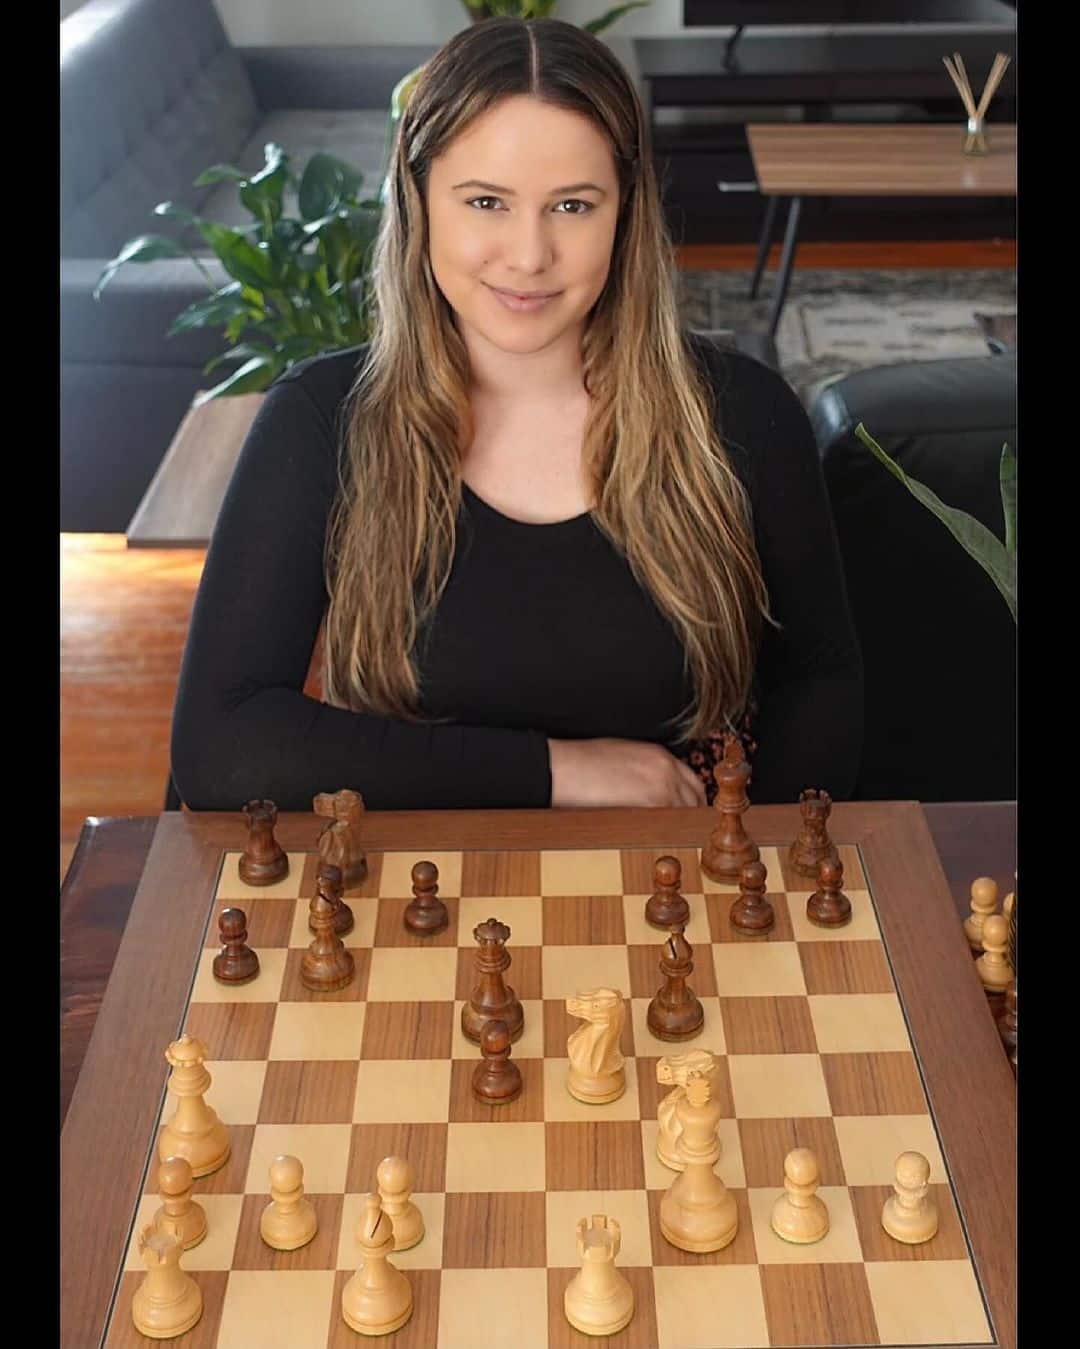 2. Yuzvendra Chahal: Ambassador and Chess Enthusiast